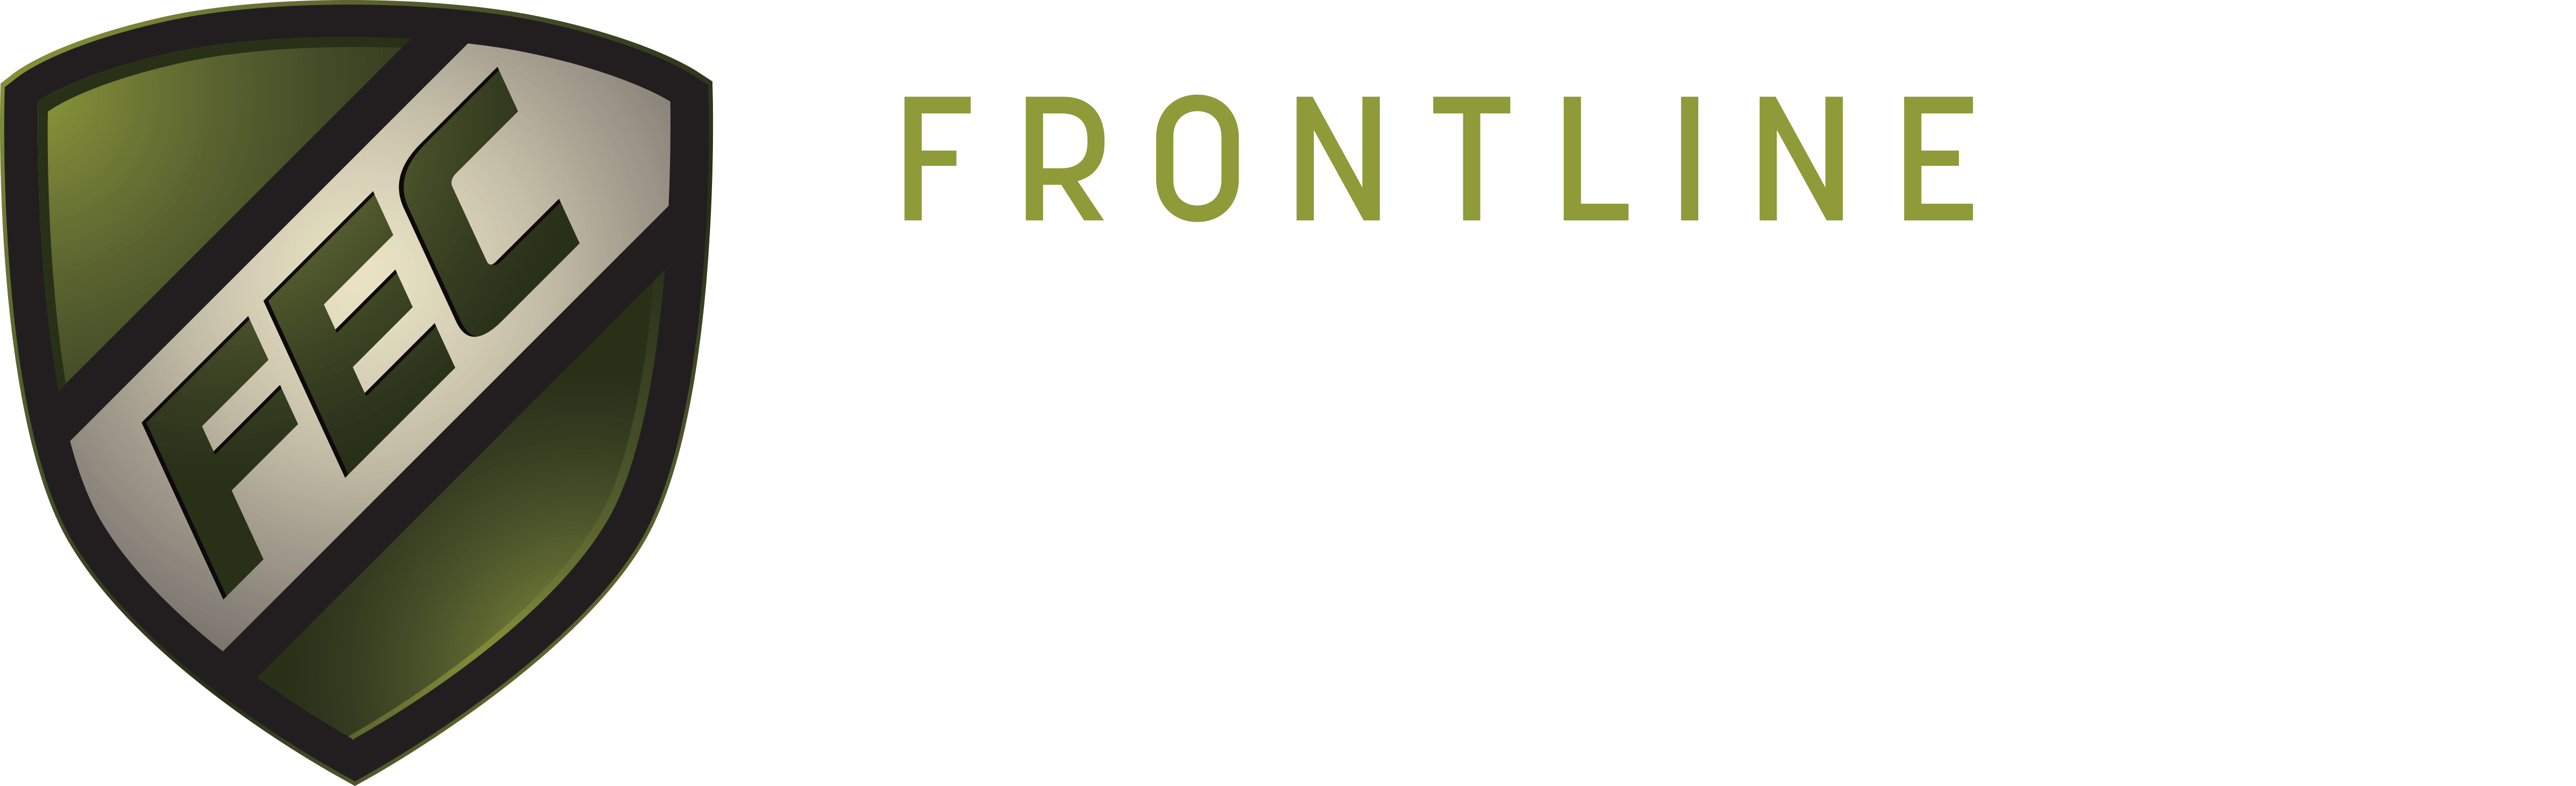 FRONTLINE ELECTRICAL Corporation logotype